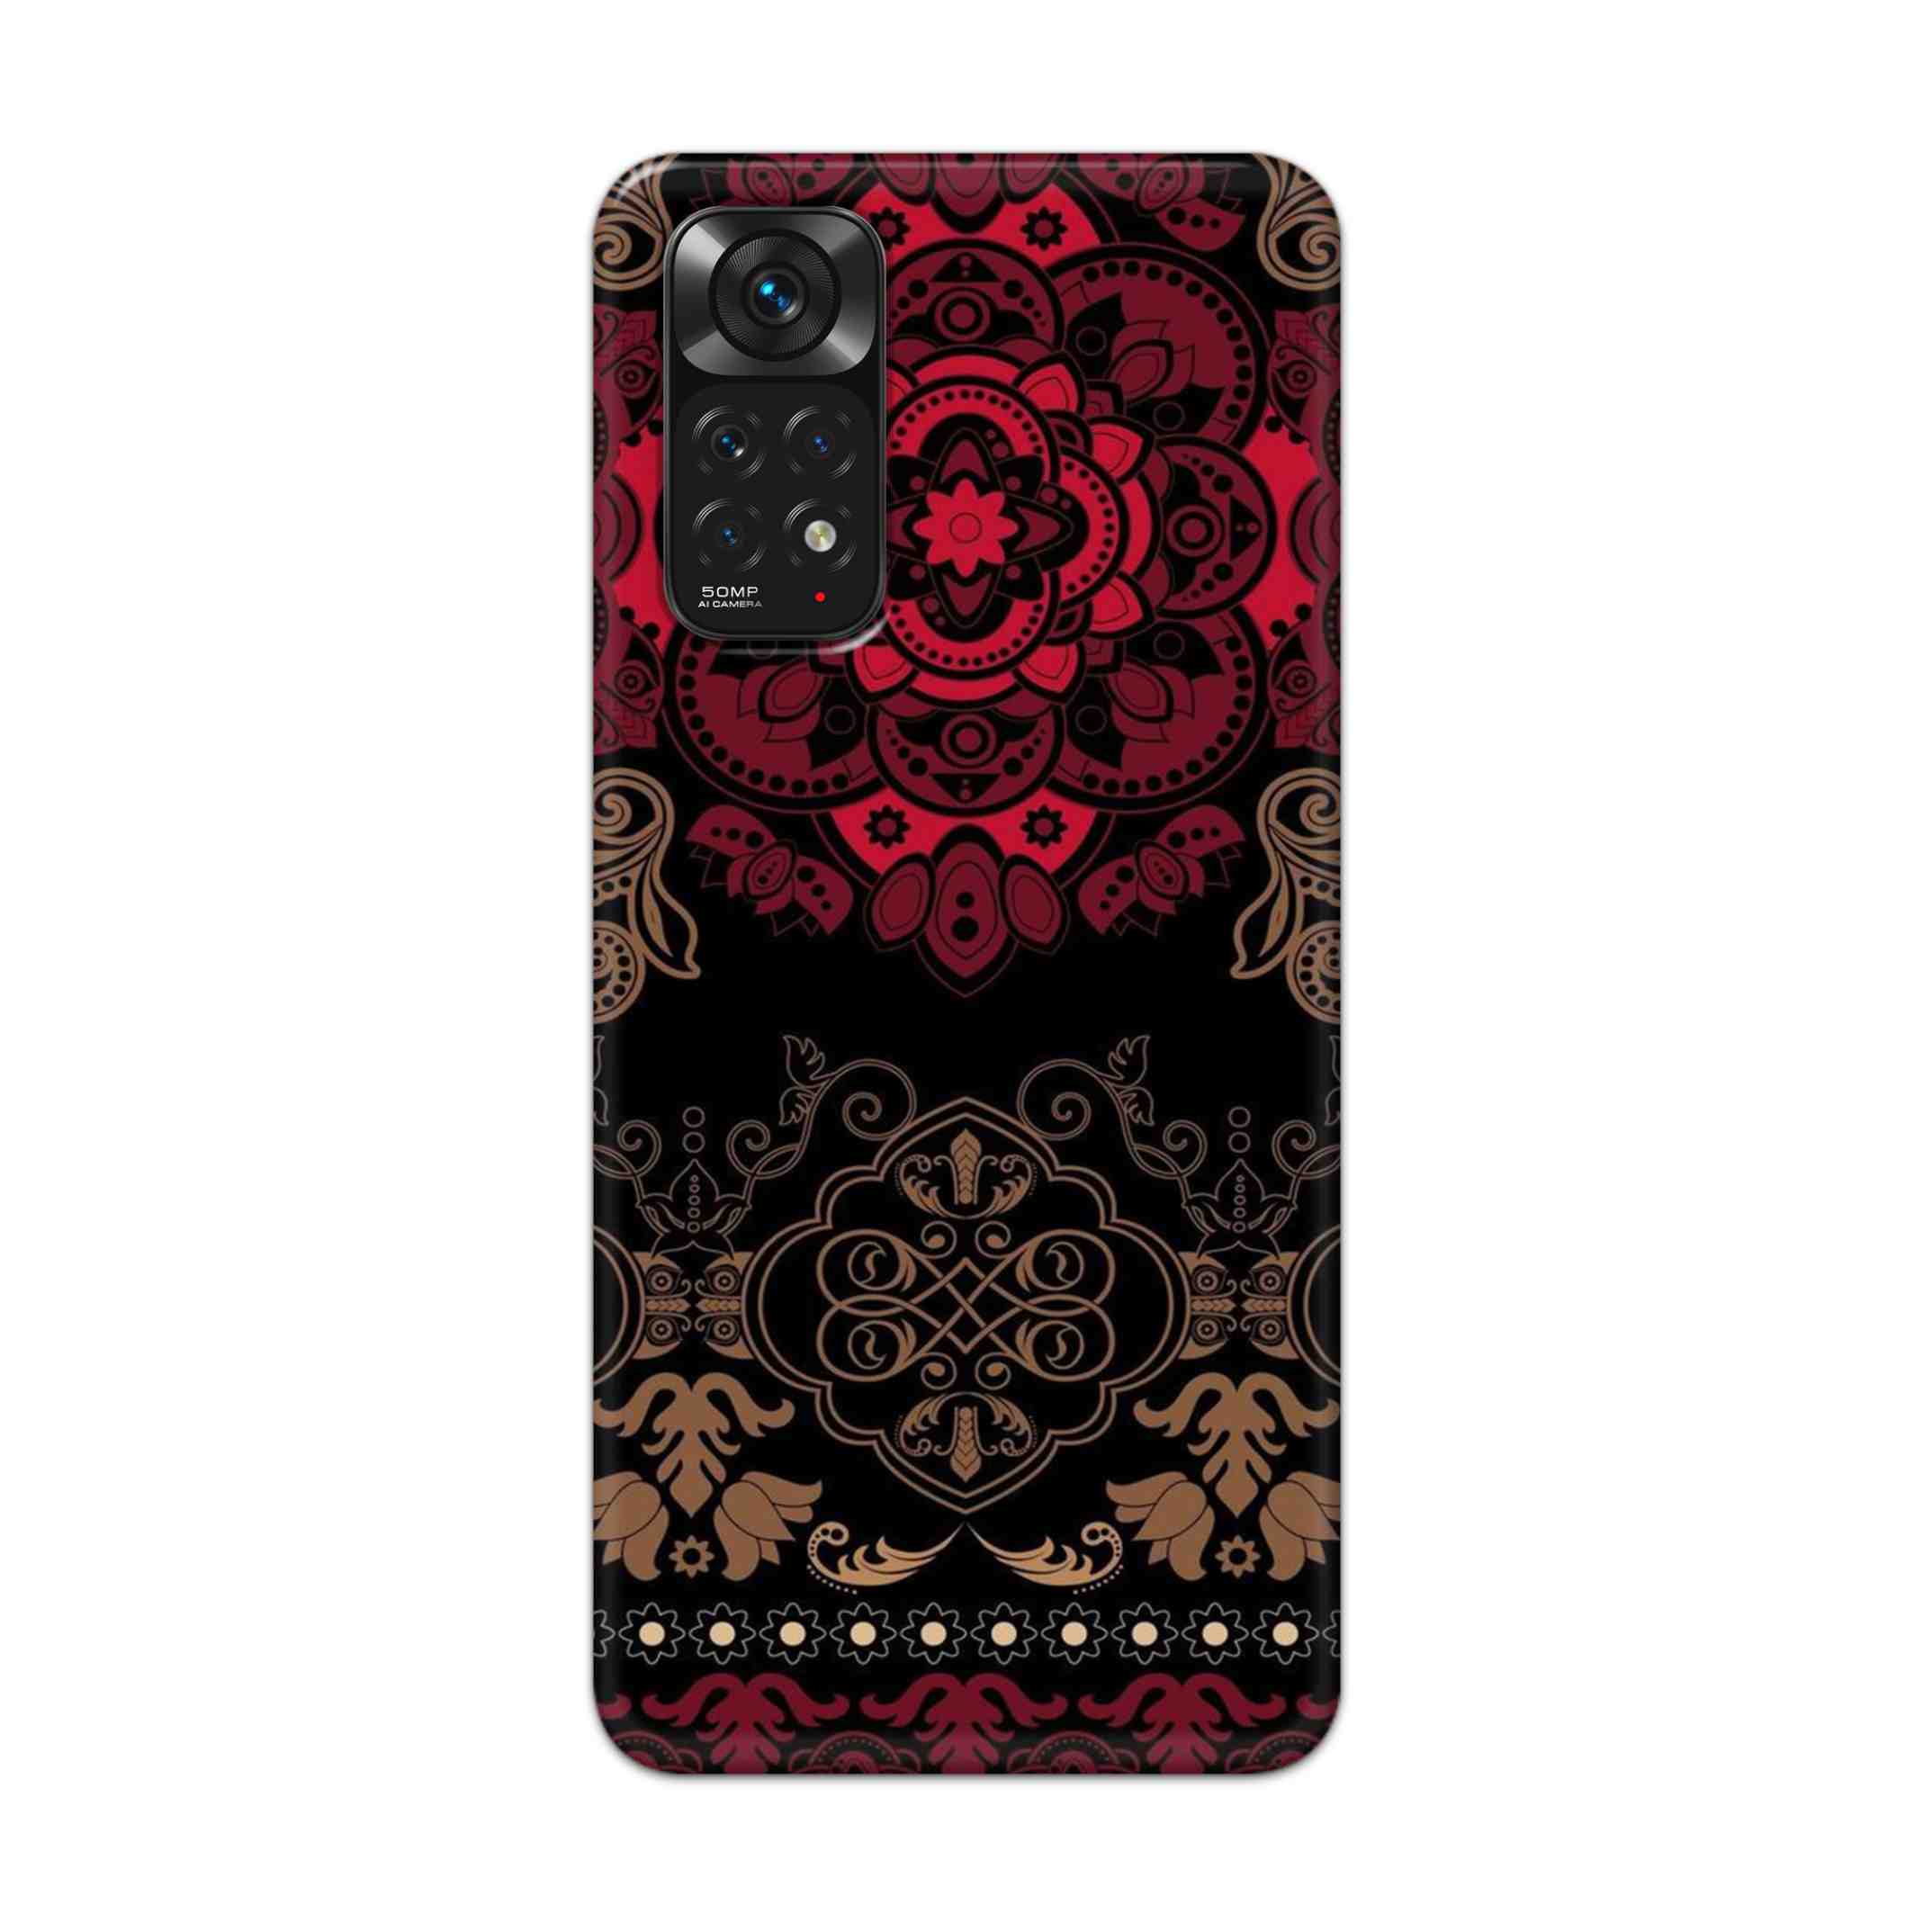 Buy Christian Mandalas Hard Back Mobile Phone Case Cover For Redmi Note 11 Online